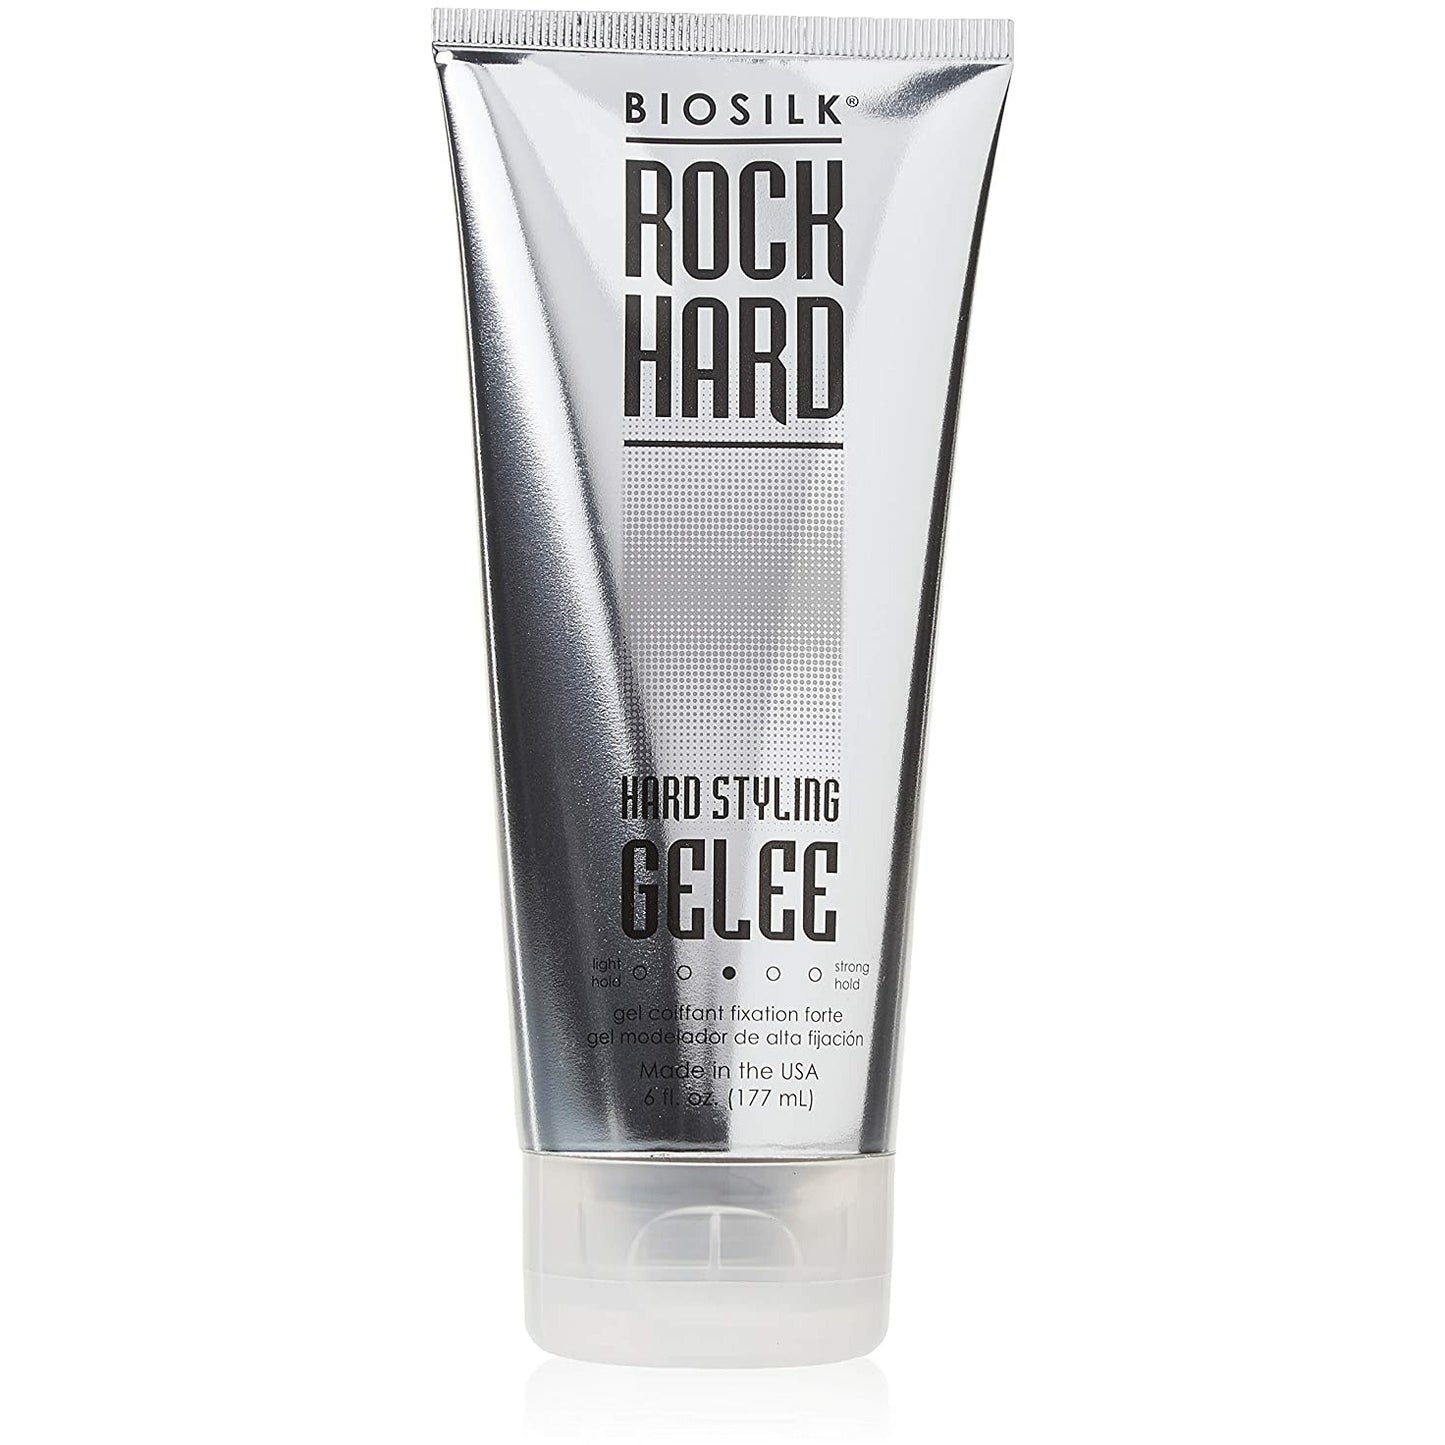 Biosilk Rock Hard Hair Styling Gelee